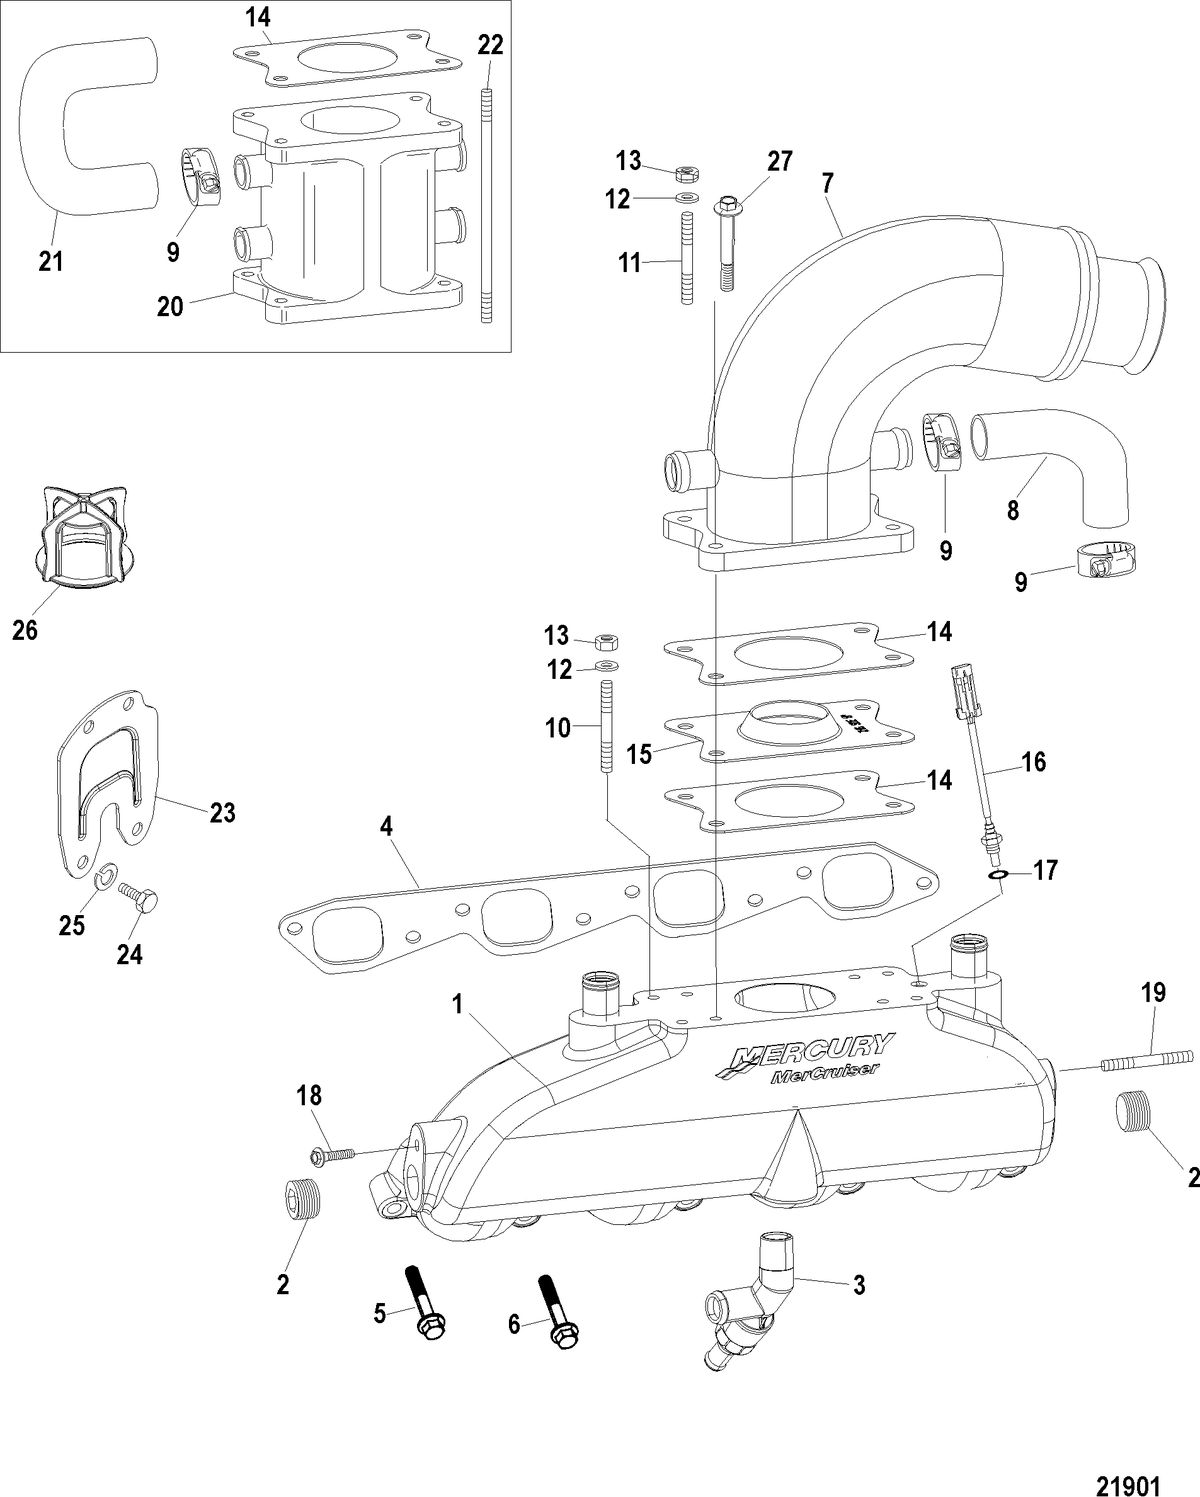 MERCRUISER 8.1L INBOARD Exhaust Manifold, Elbow and Riser